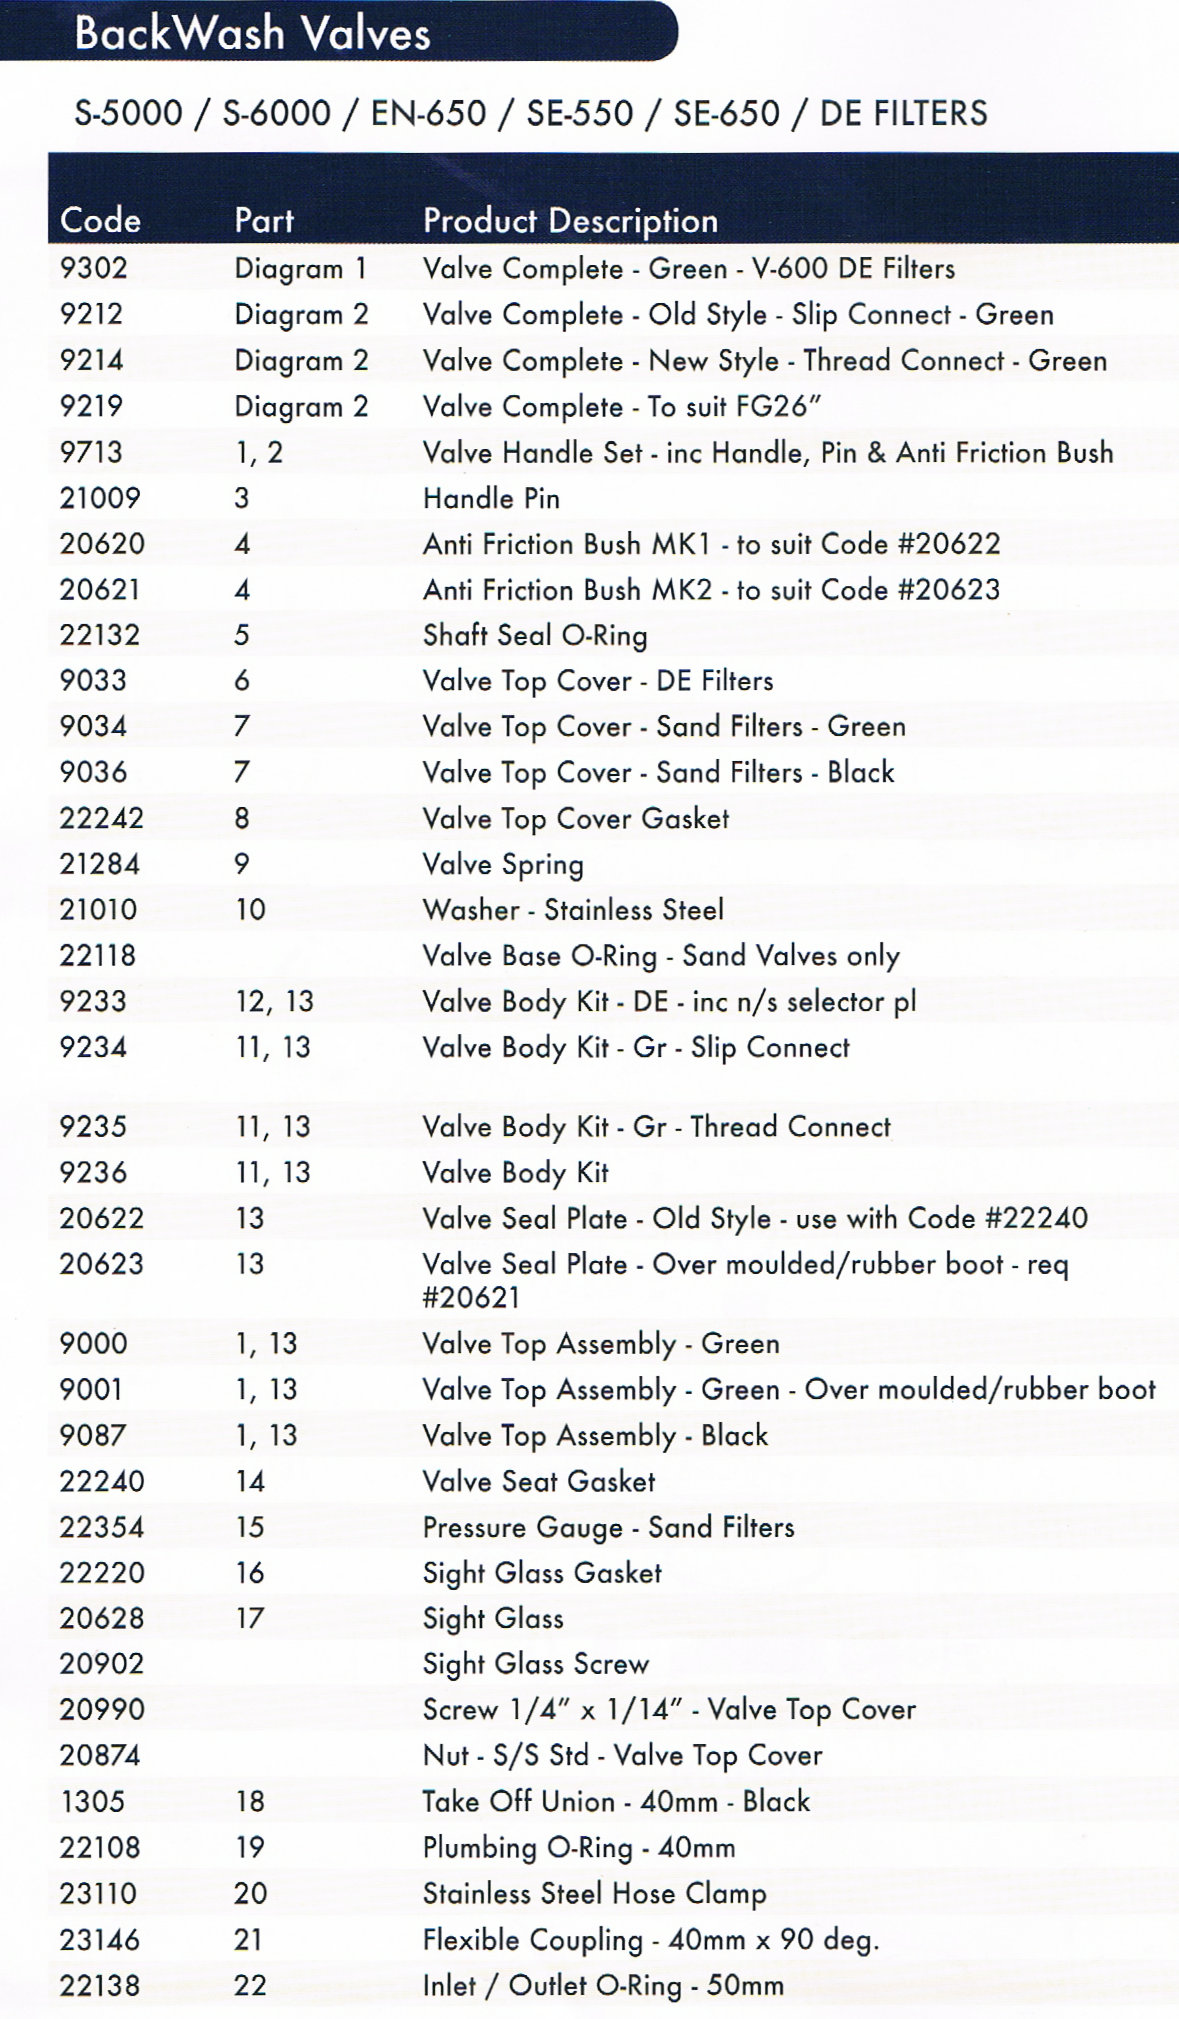 poolrite-backwash-valves-parts-list.jpg